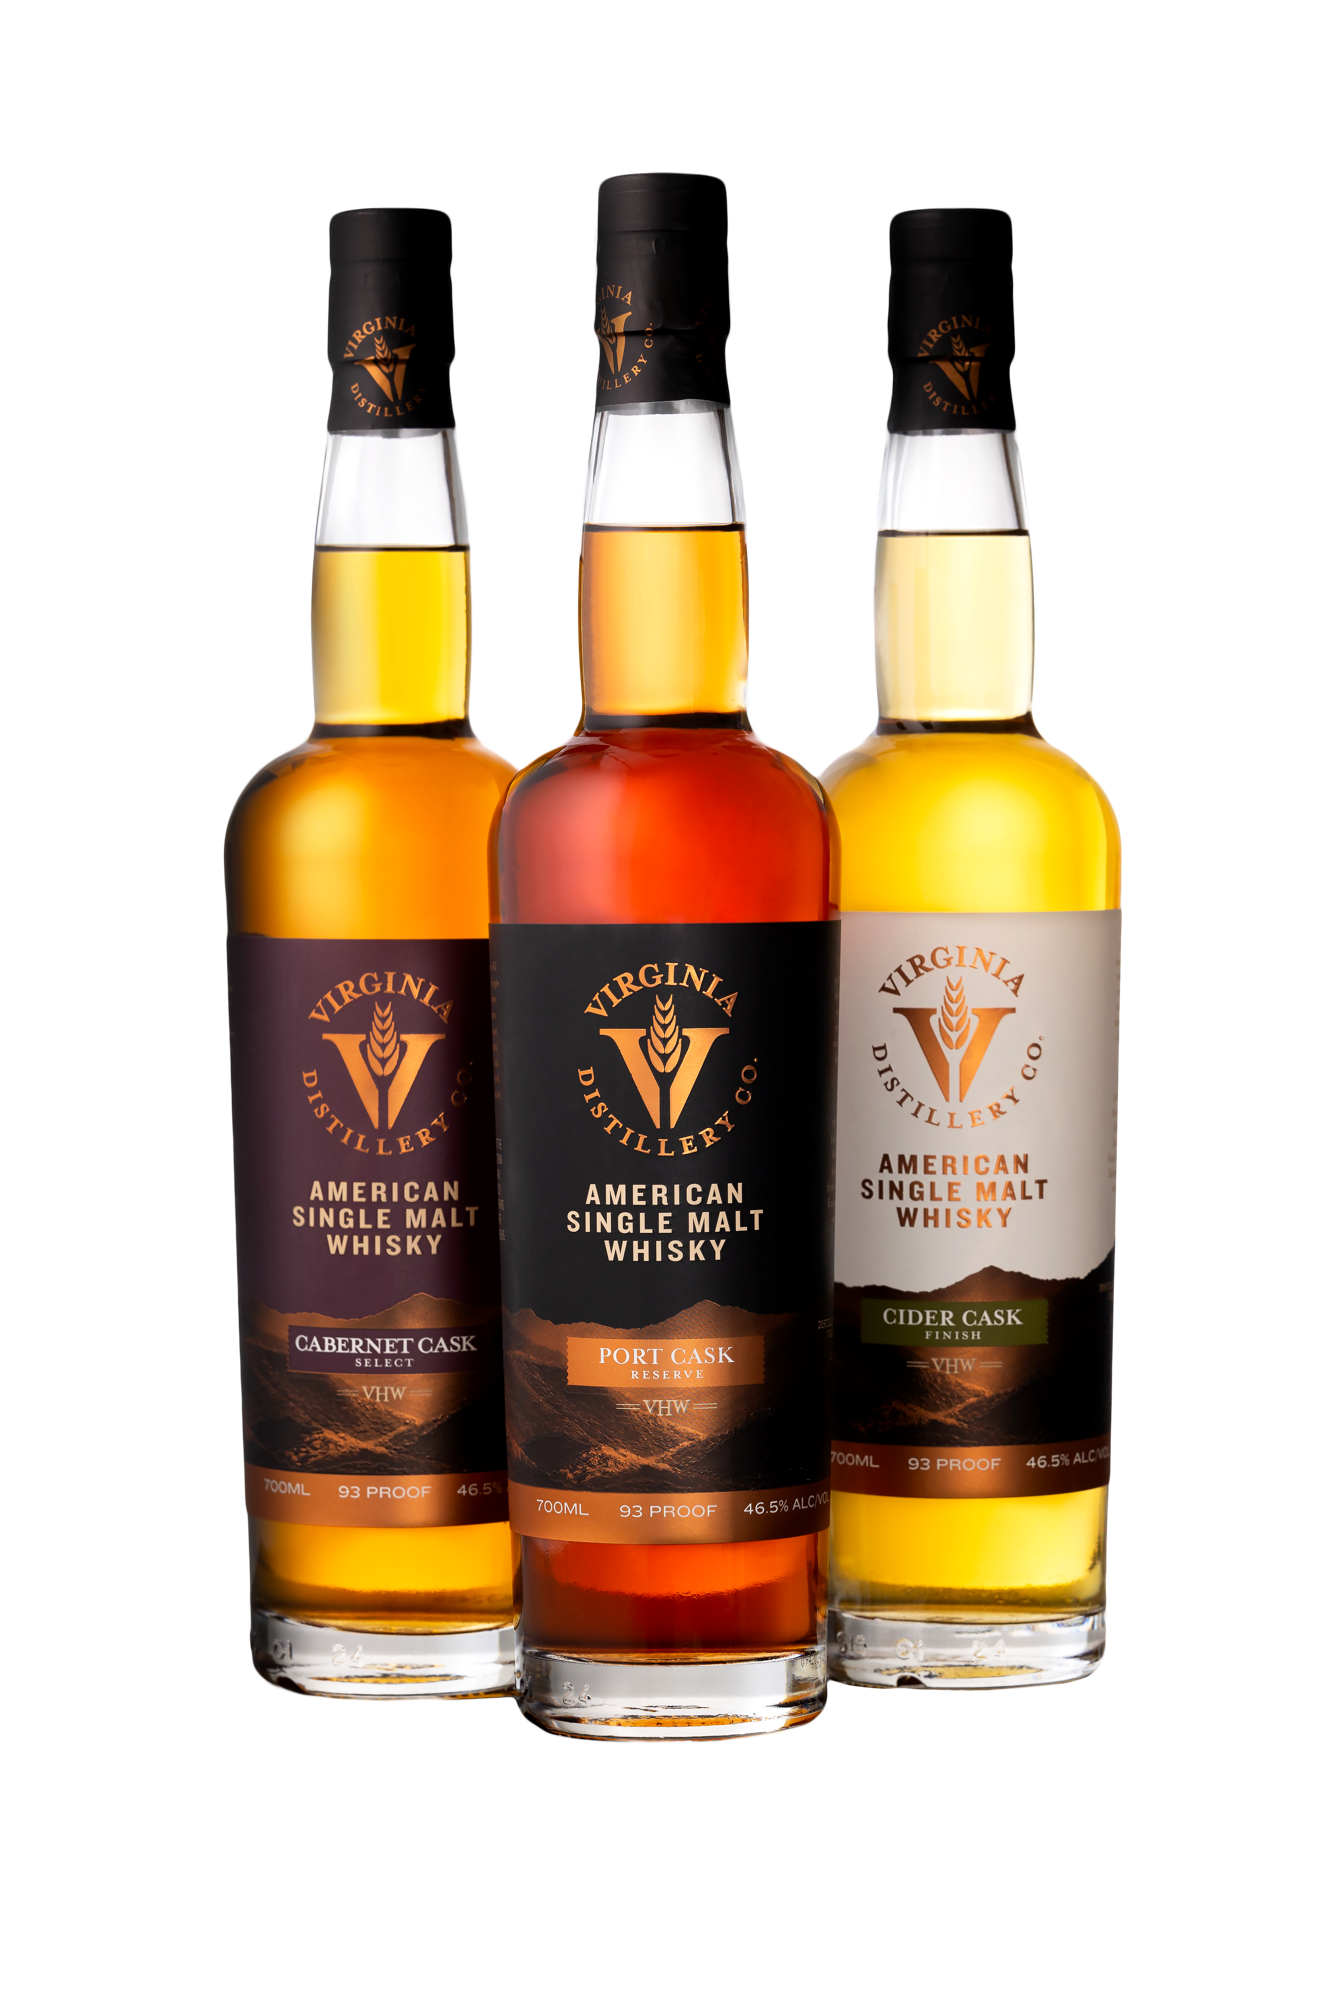 Virginia Distillery Co. Announces 3 New American Single Malt Whiskies